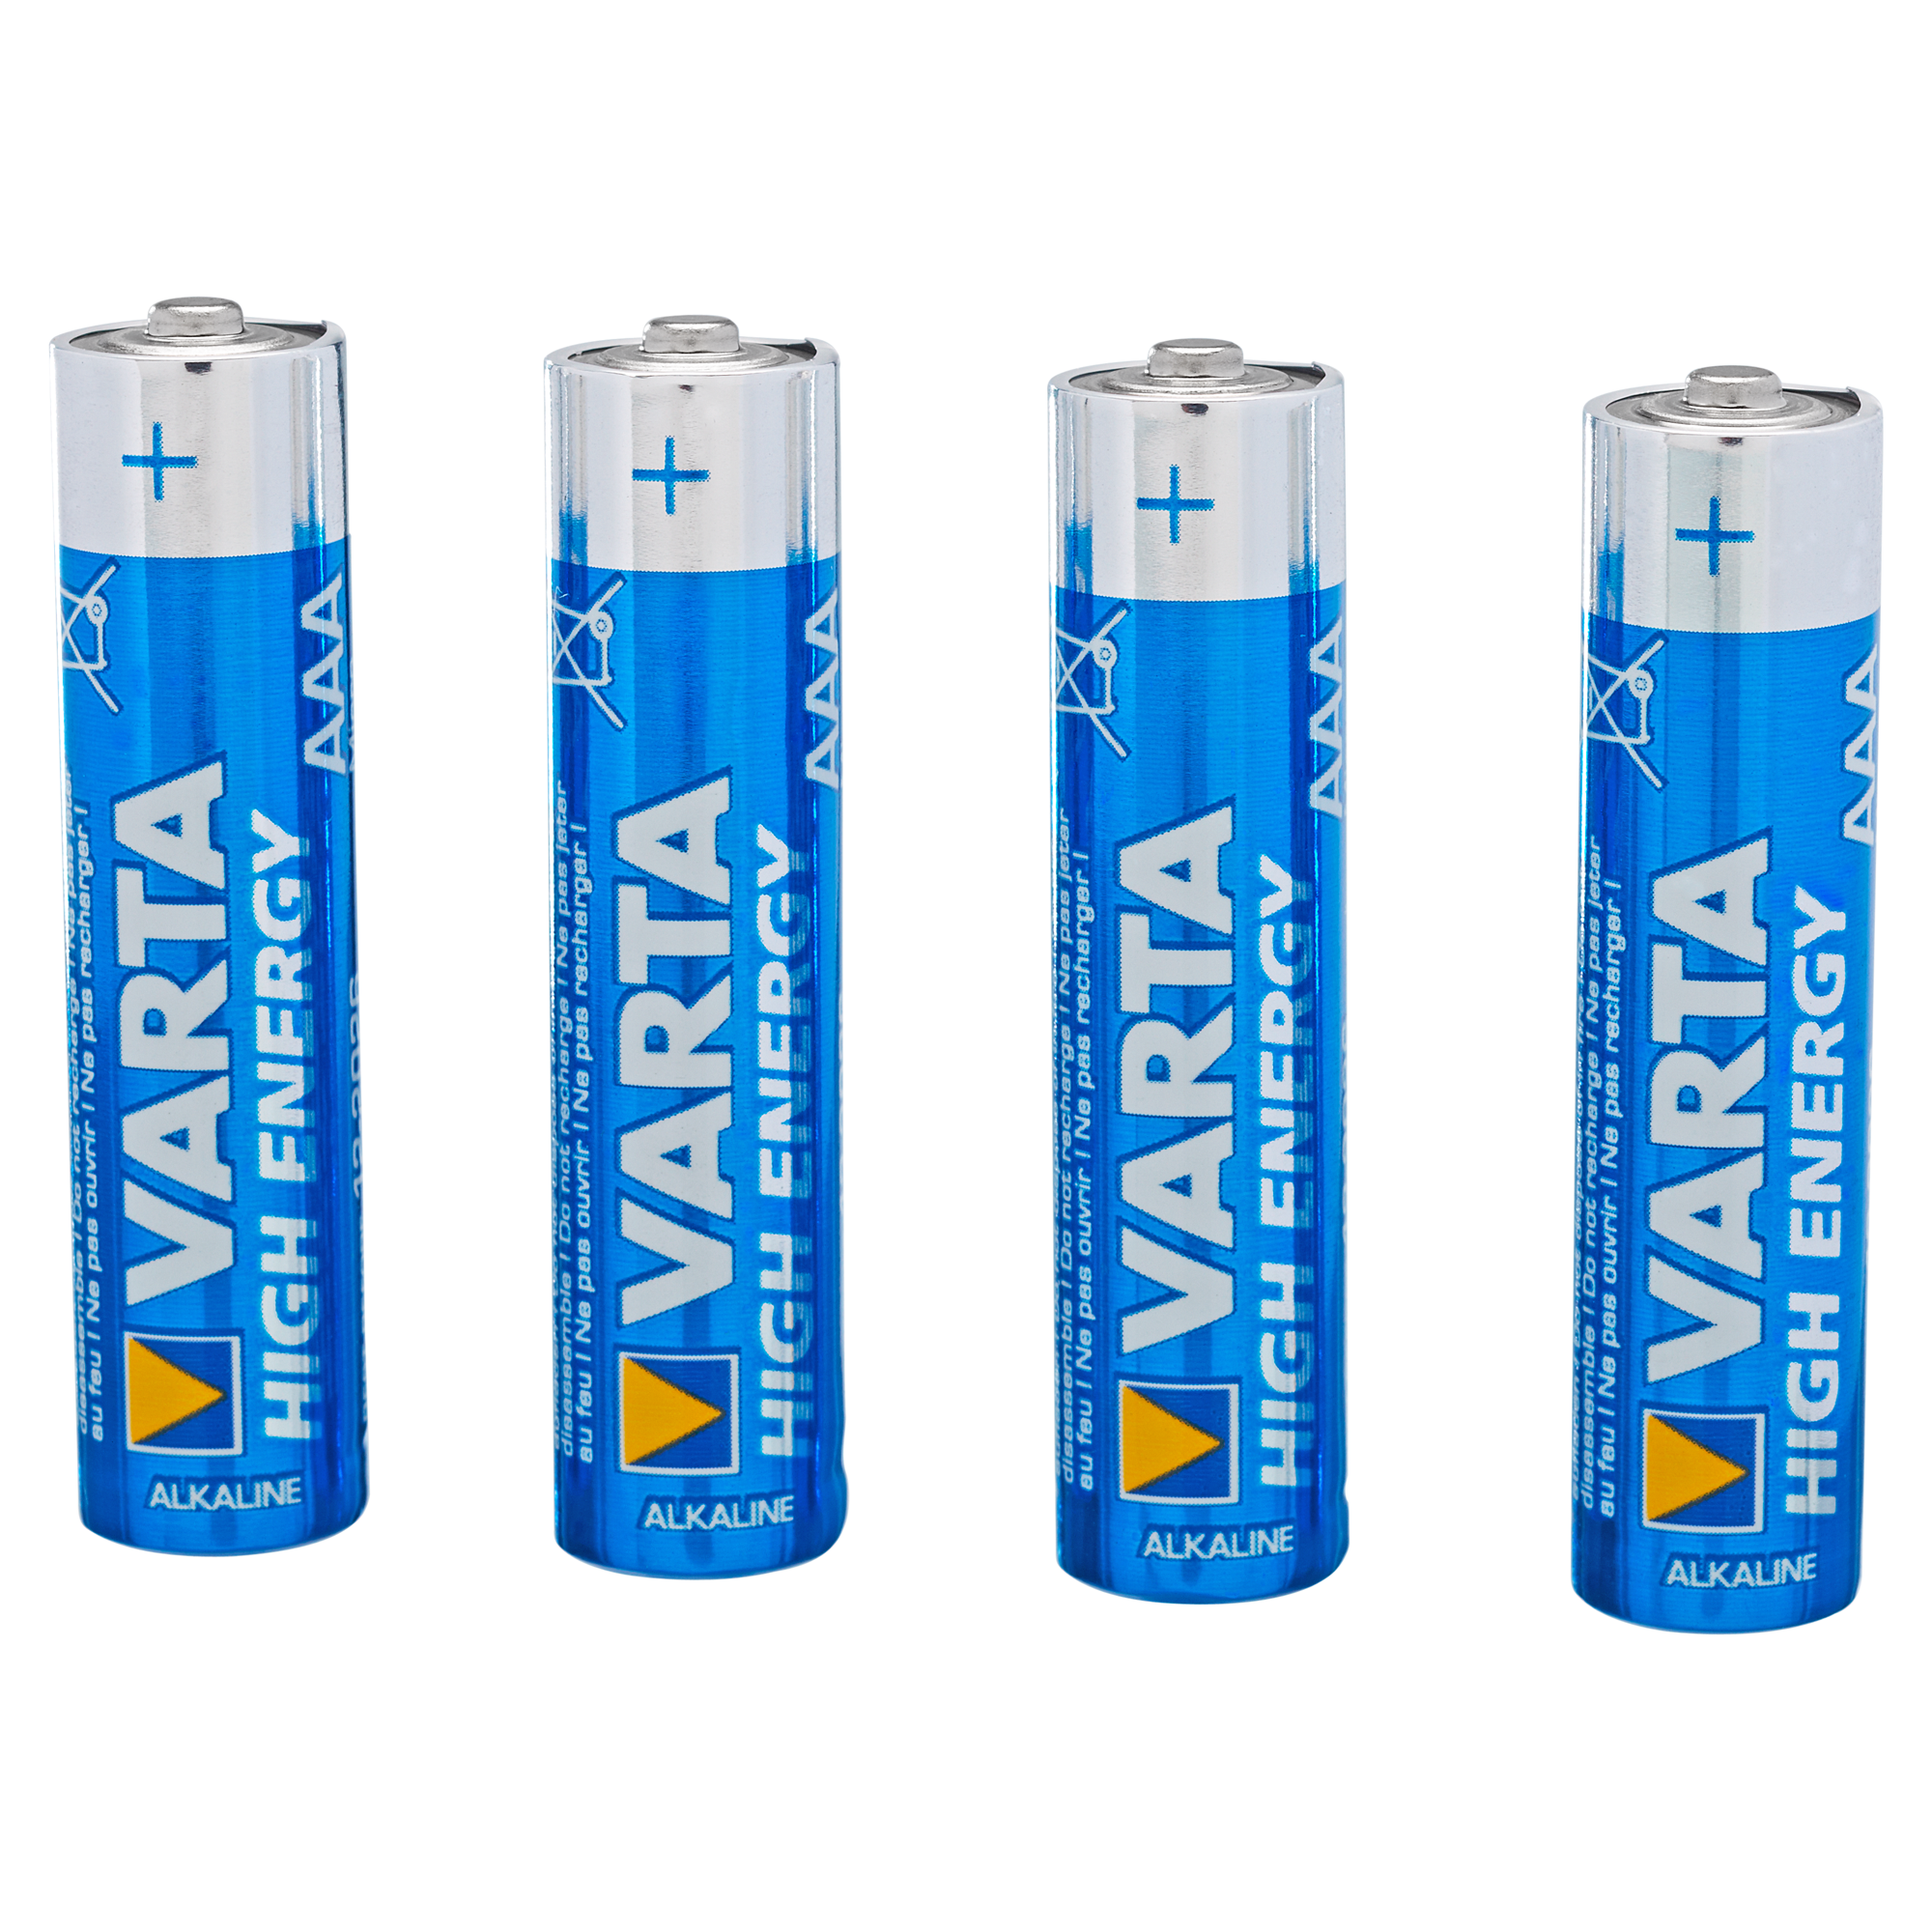 Batterien "High Energy" AAA Alkaline 4 Stück + product picture